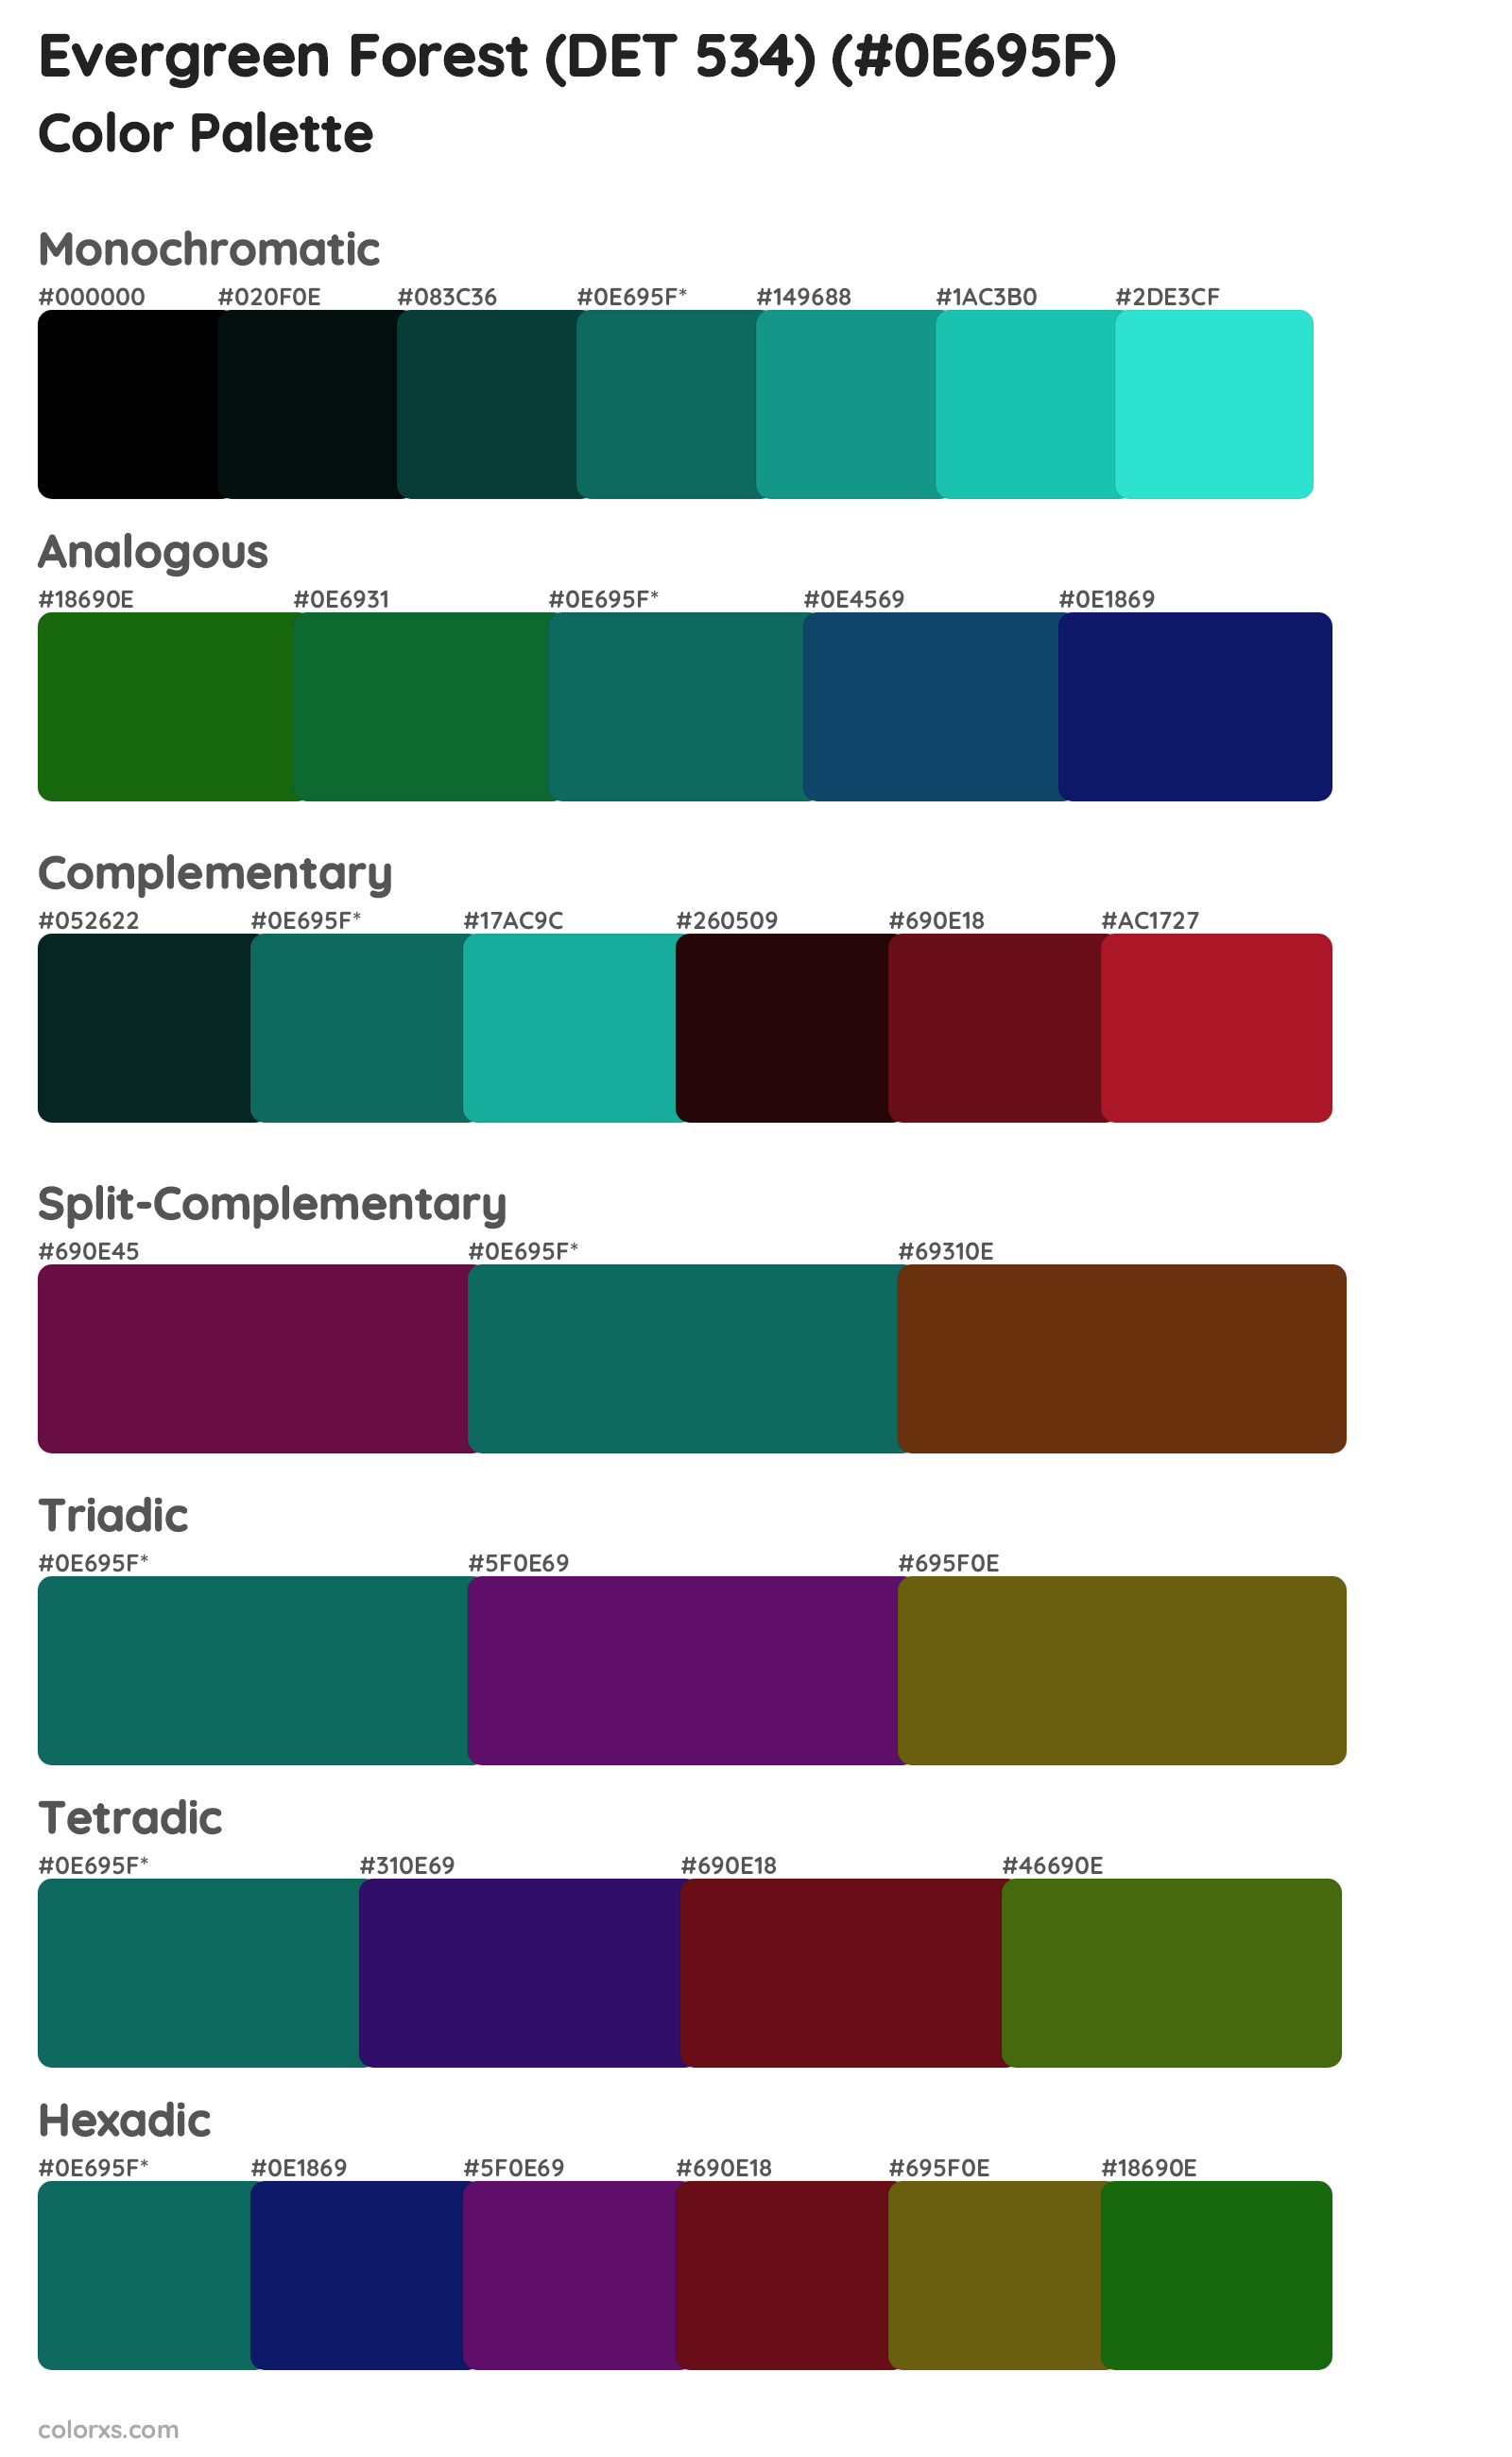 Evergreen Forest (DET 534) Color Scheme Palettes